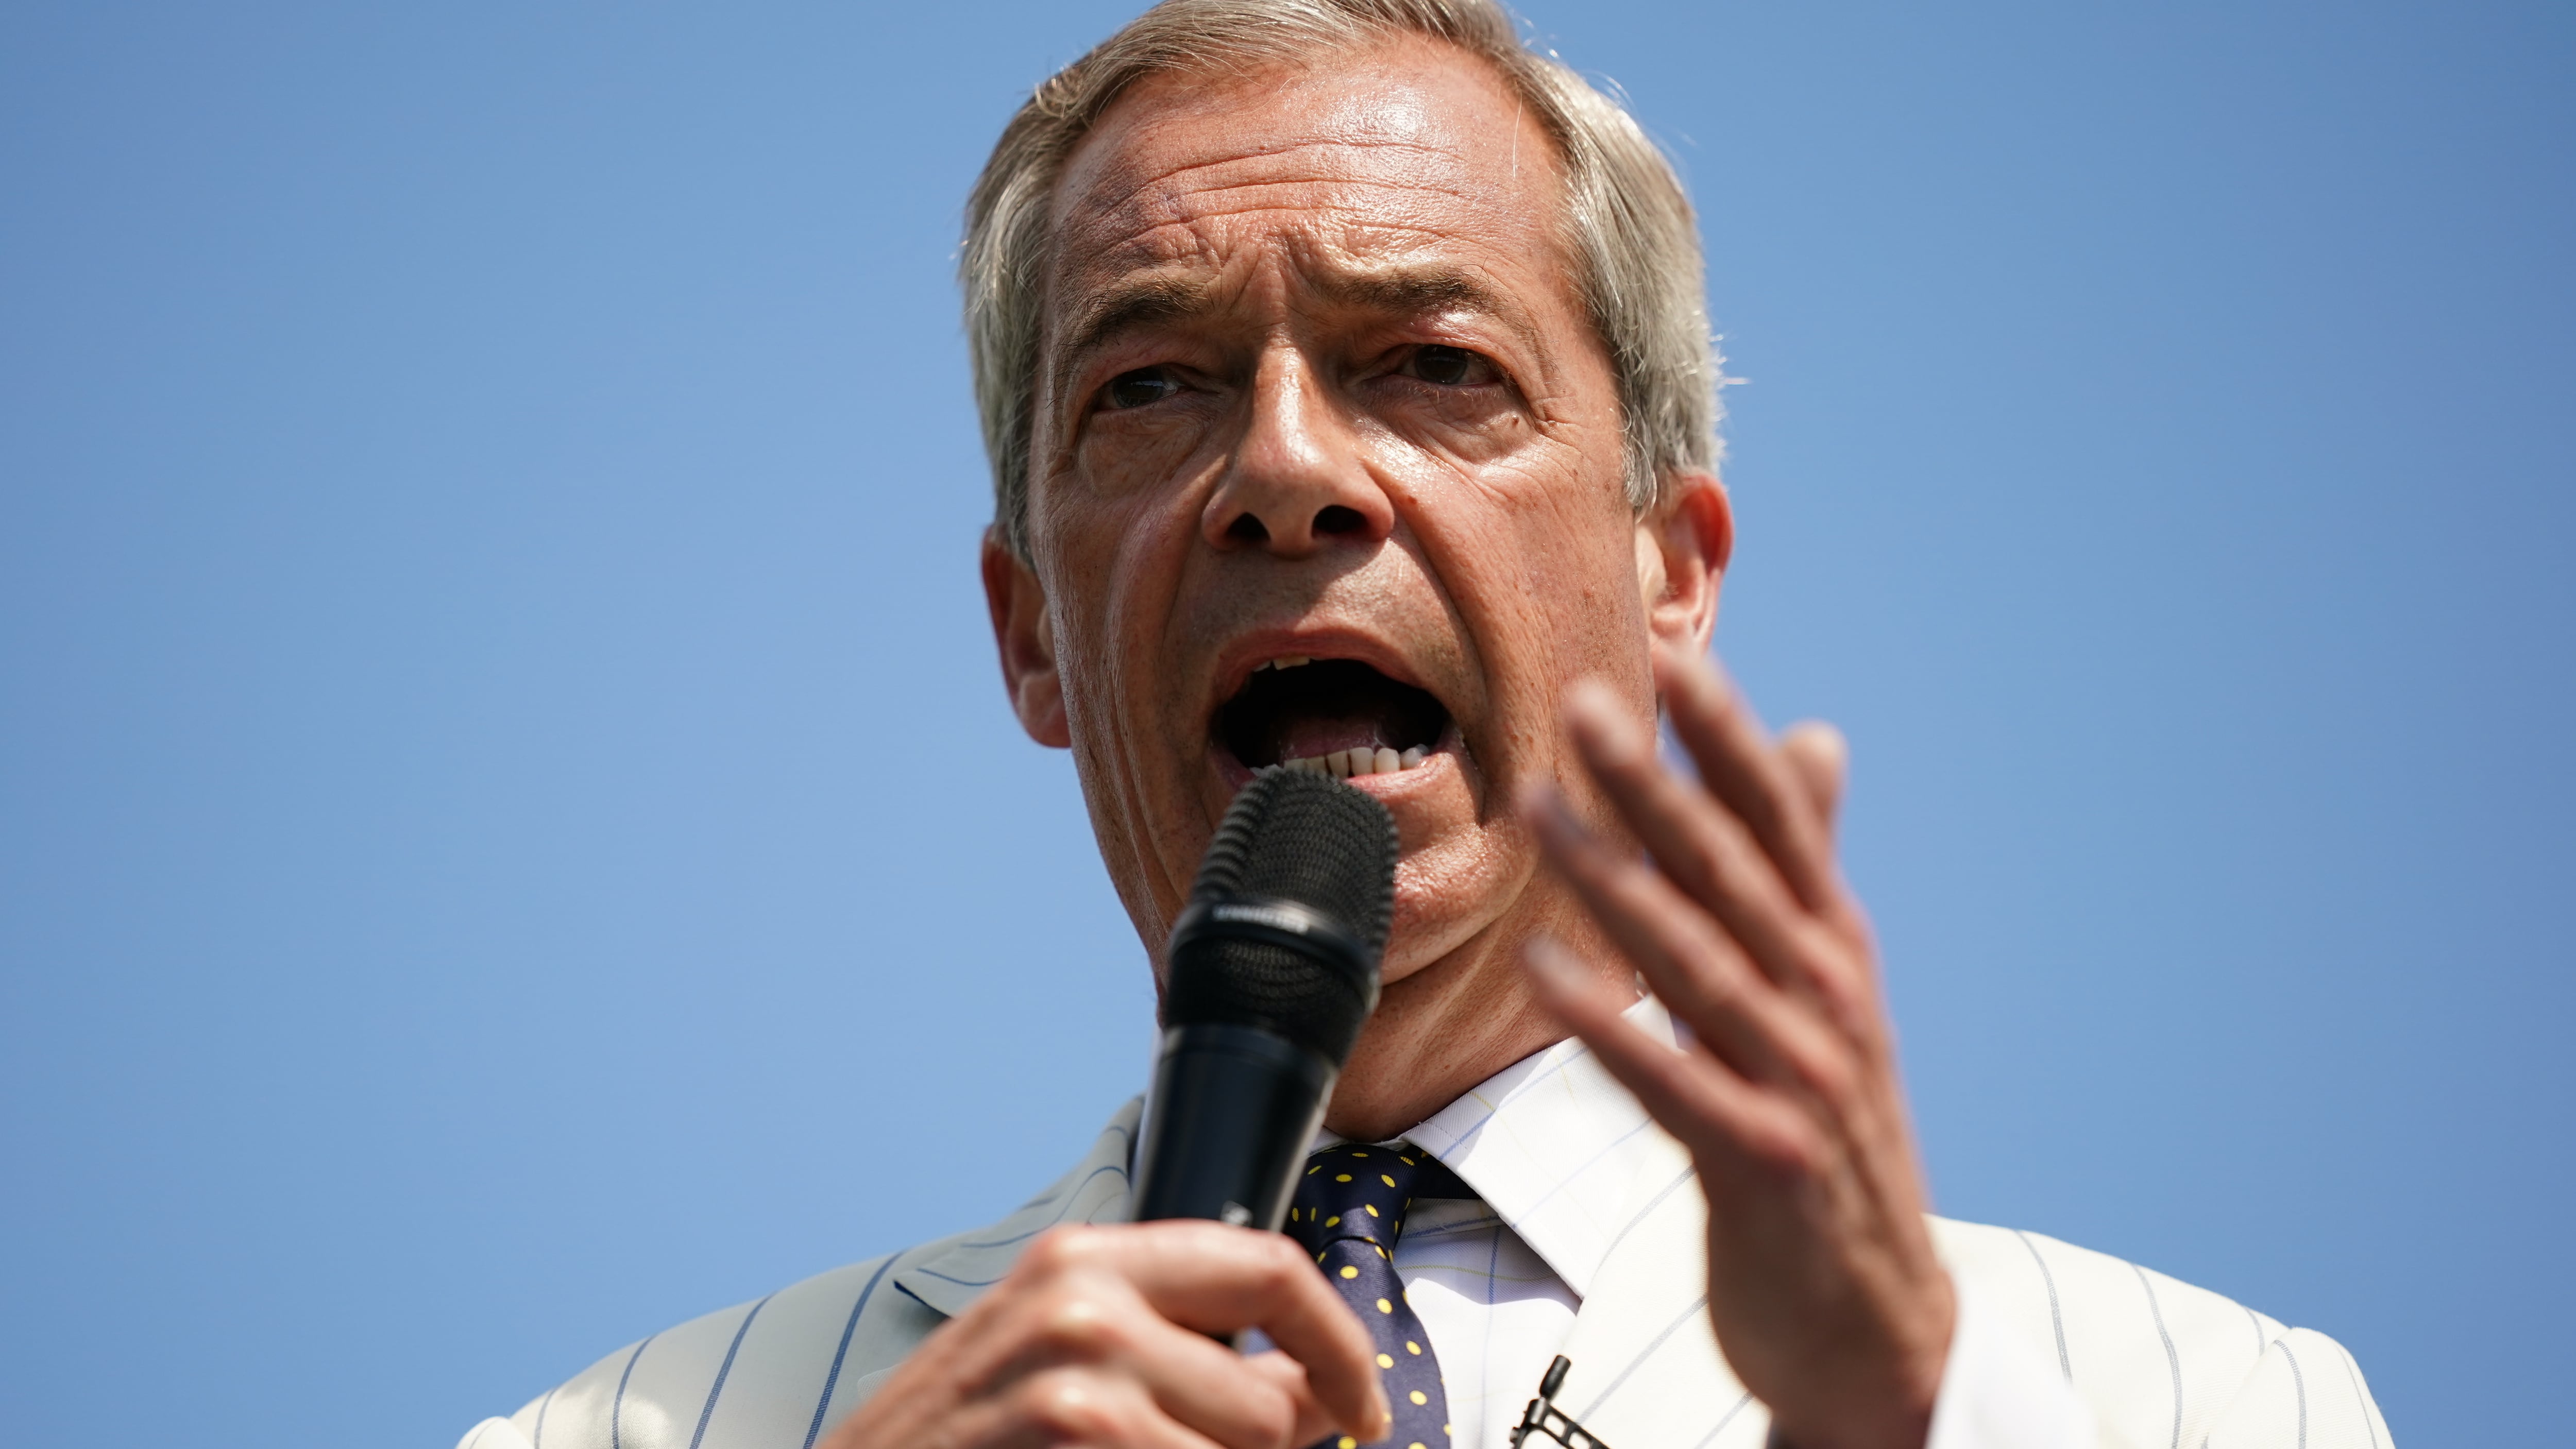 Reform UK leader Nigel Farage won a Tric award for news presenting